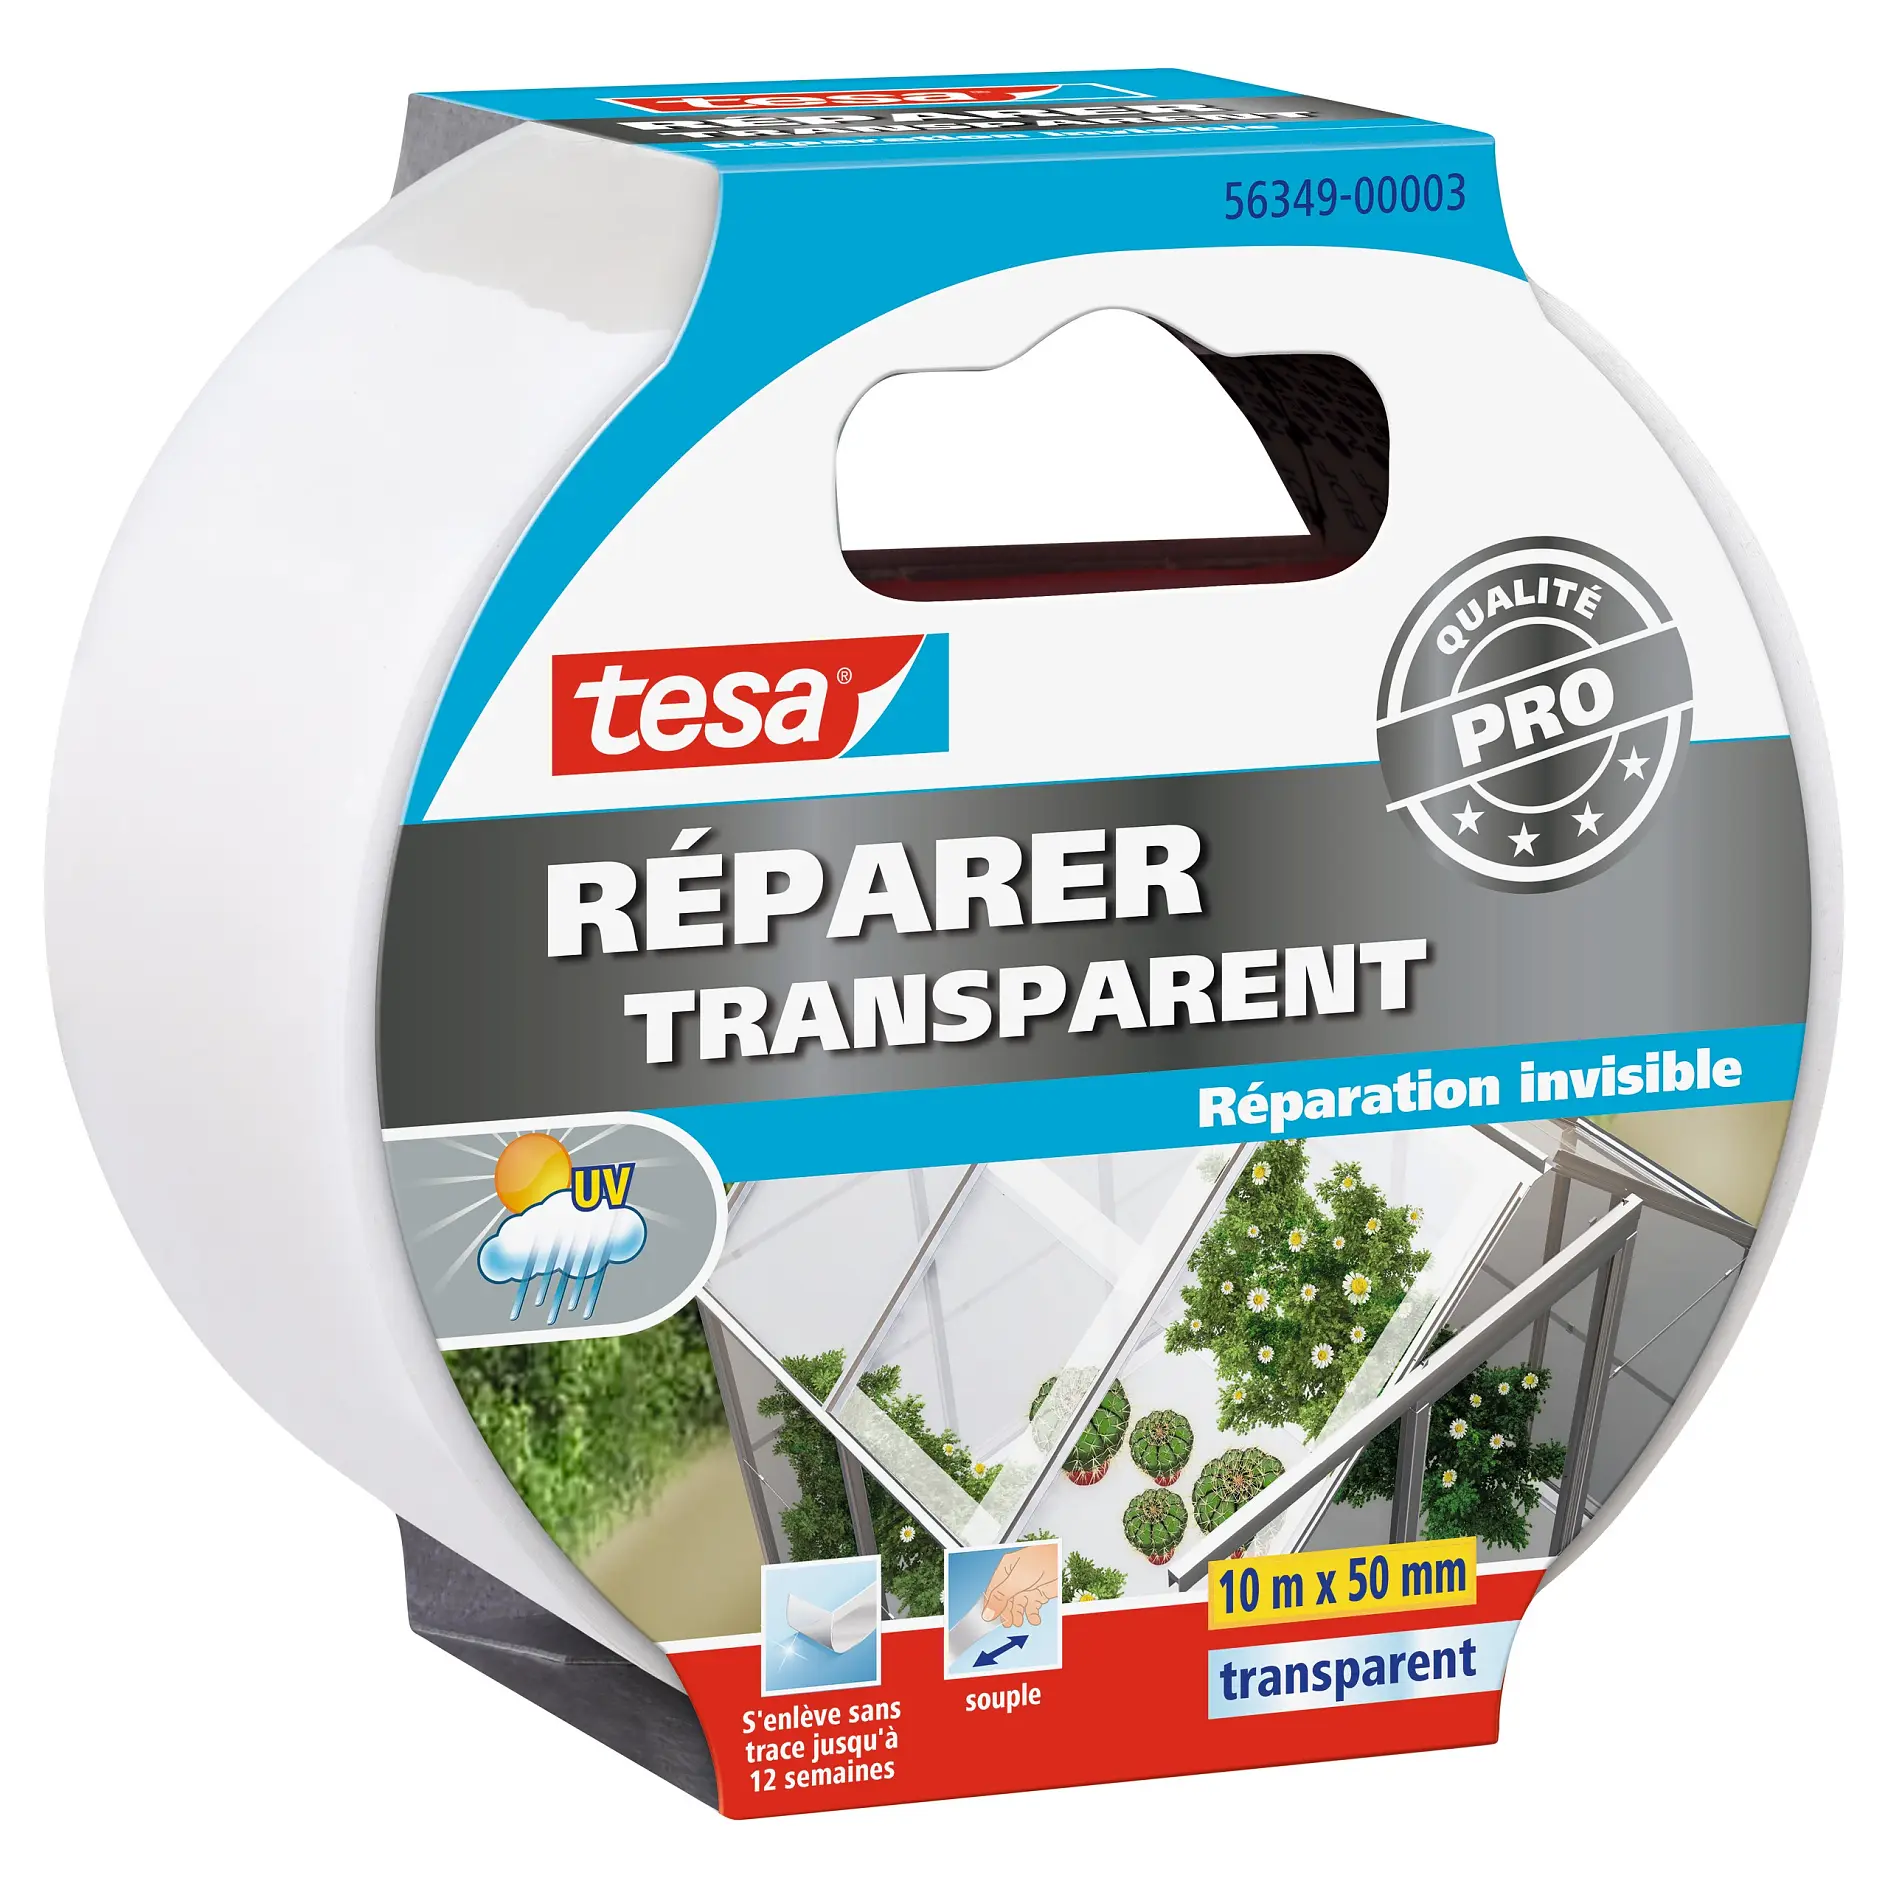 [en-en] tesa Repairing tape Transparent, France, 10m x 50mm